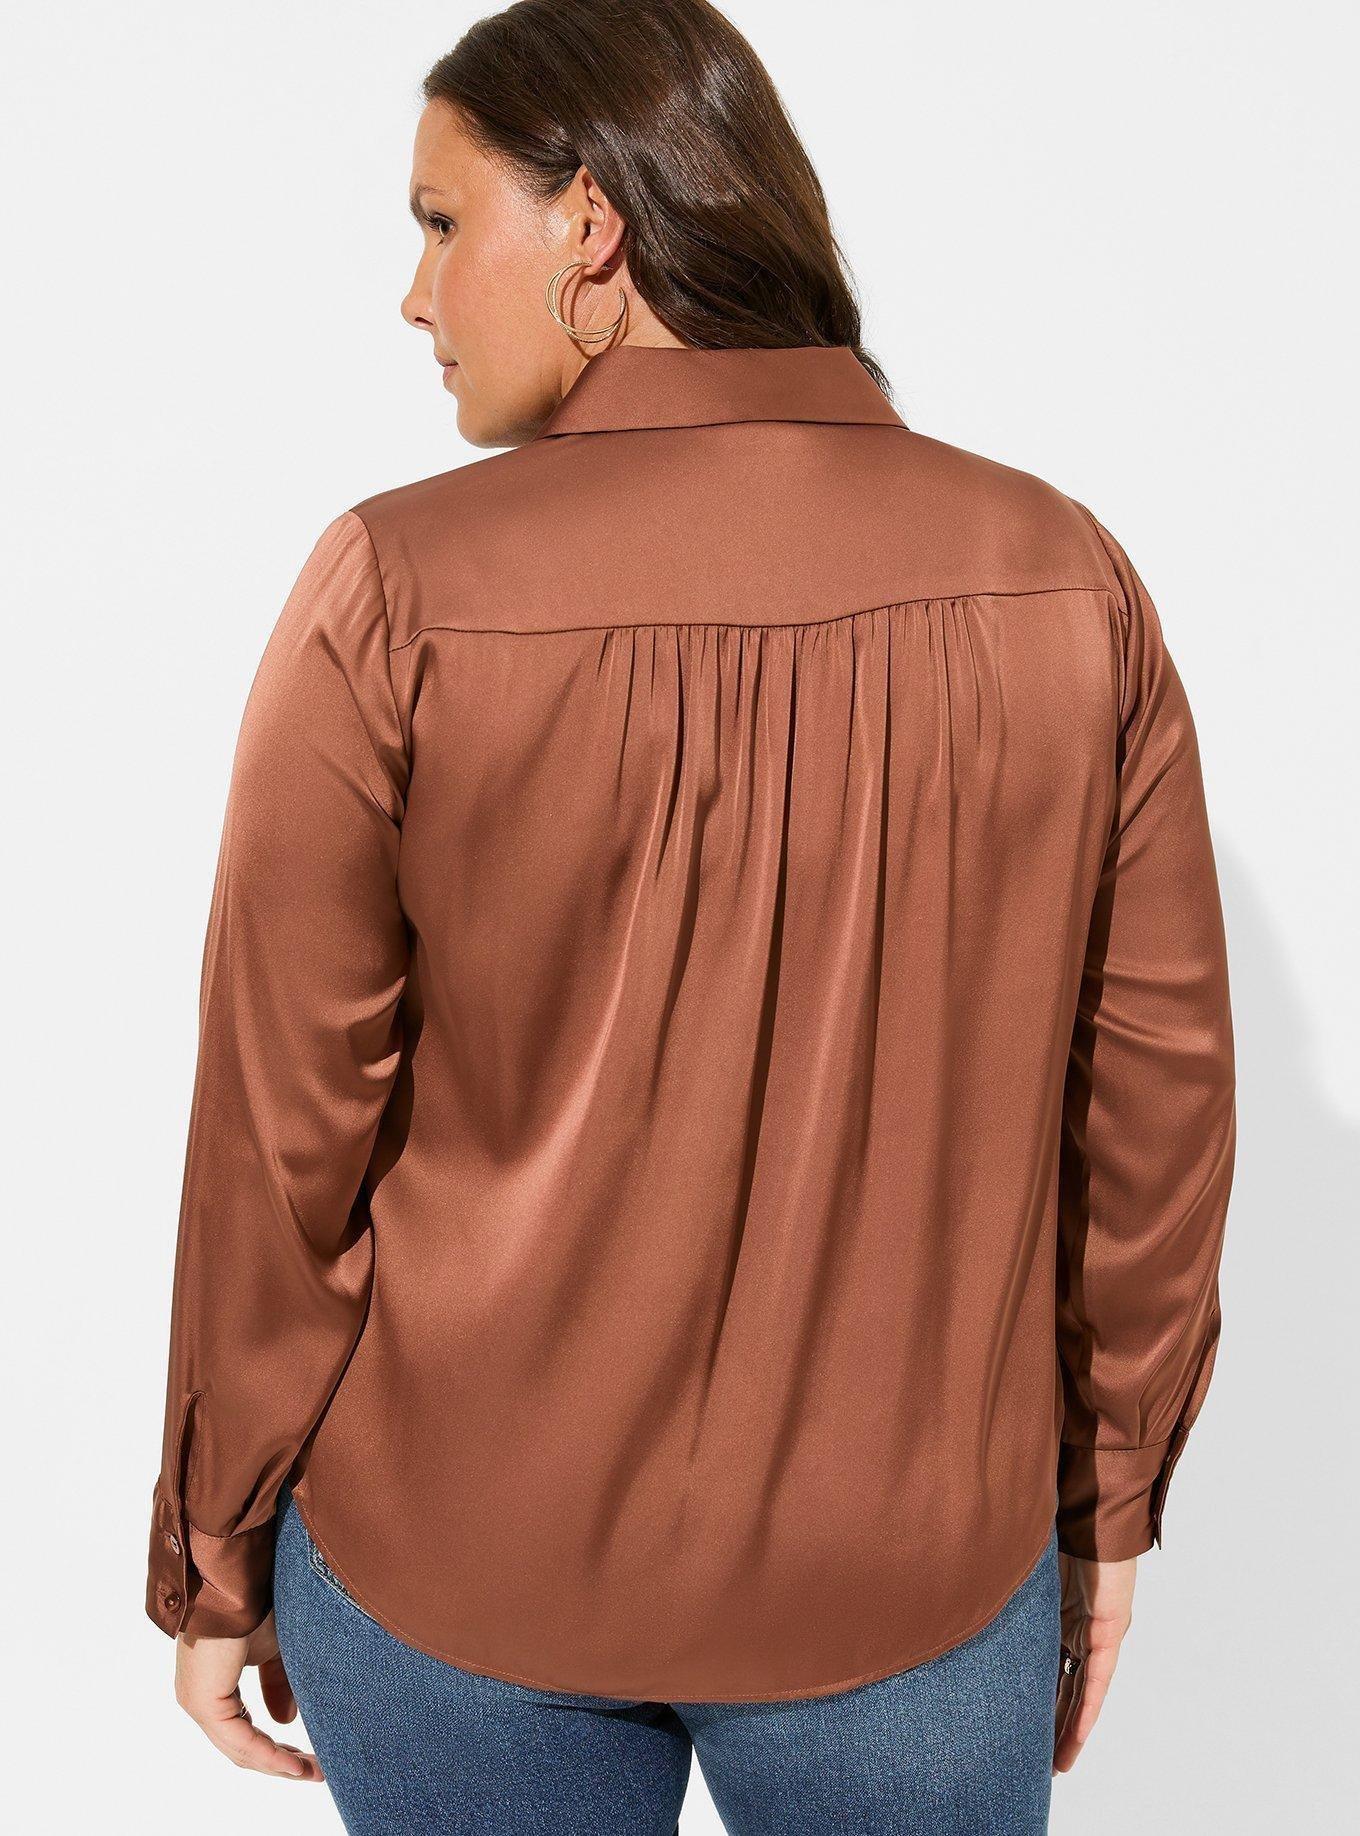 Torrid Rust Collared Button Front Shirt Dress Plus Size 3X, 22/24